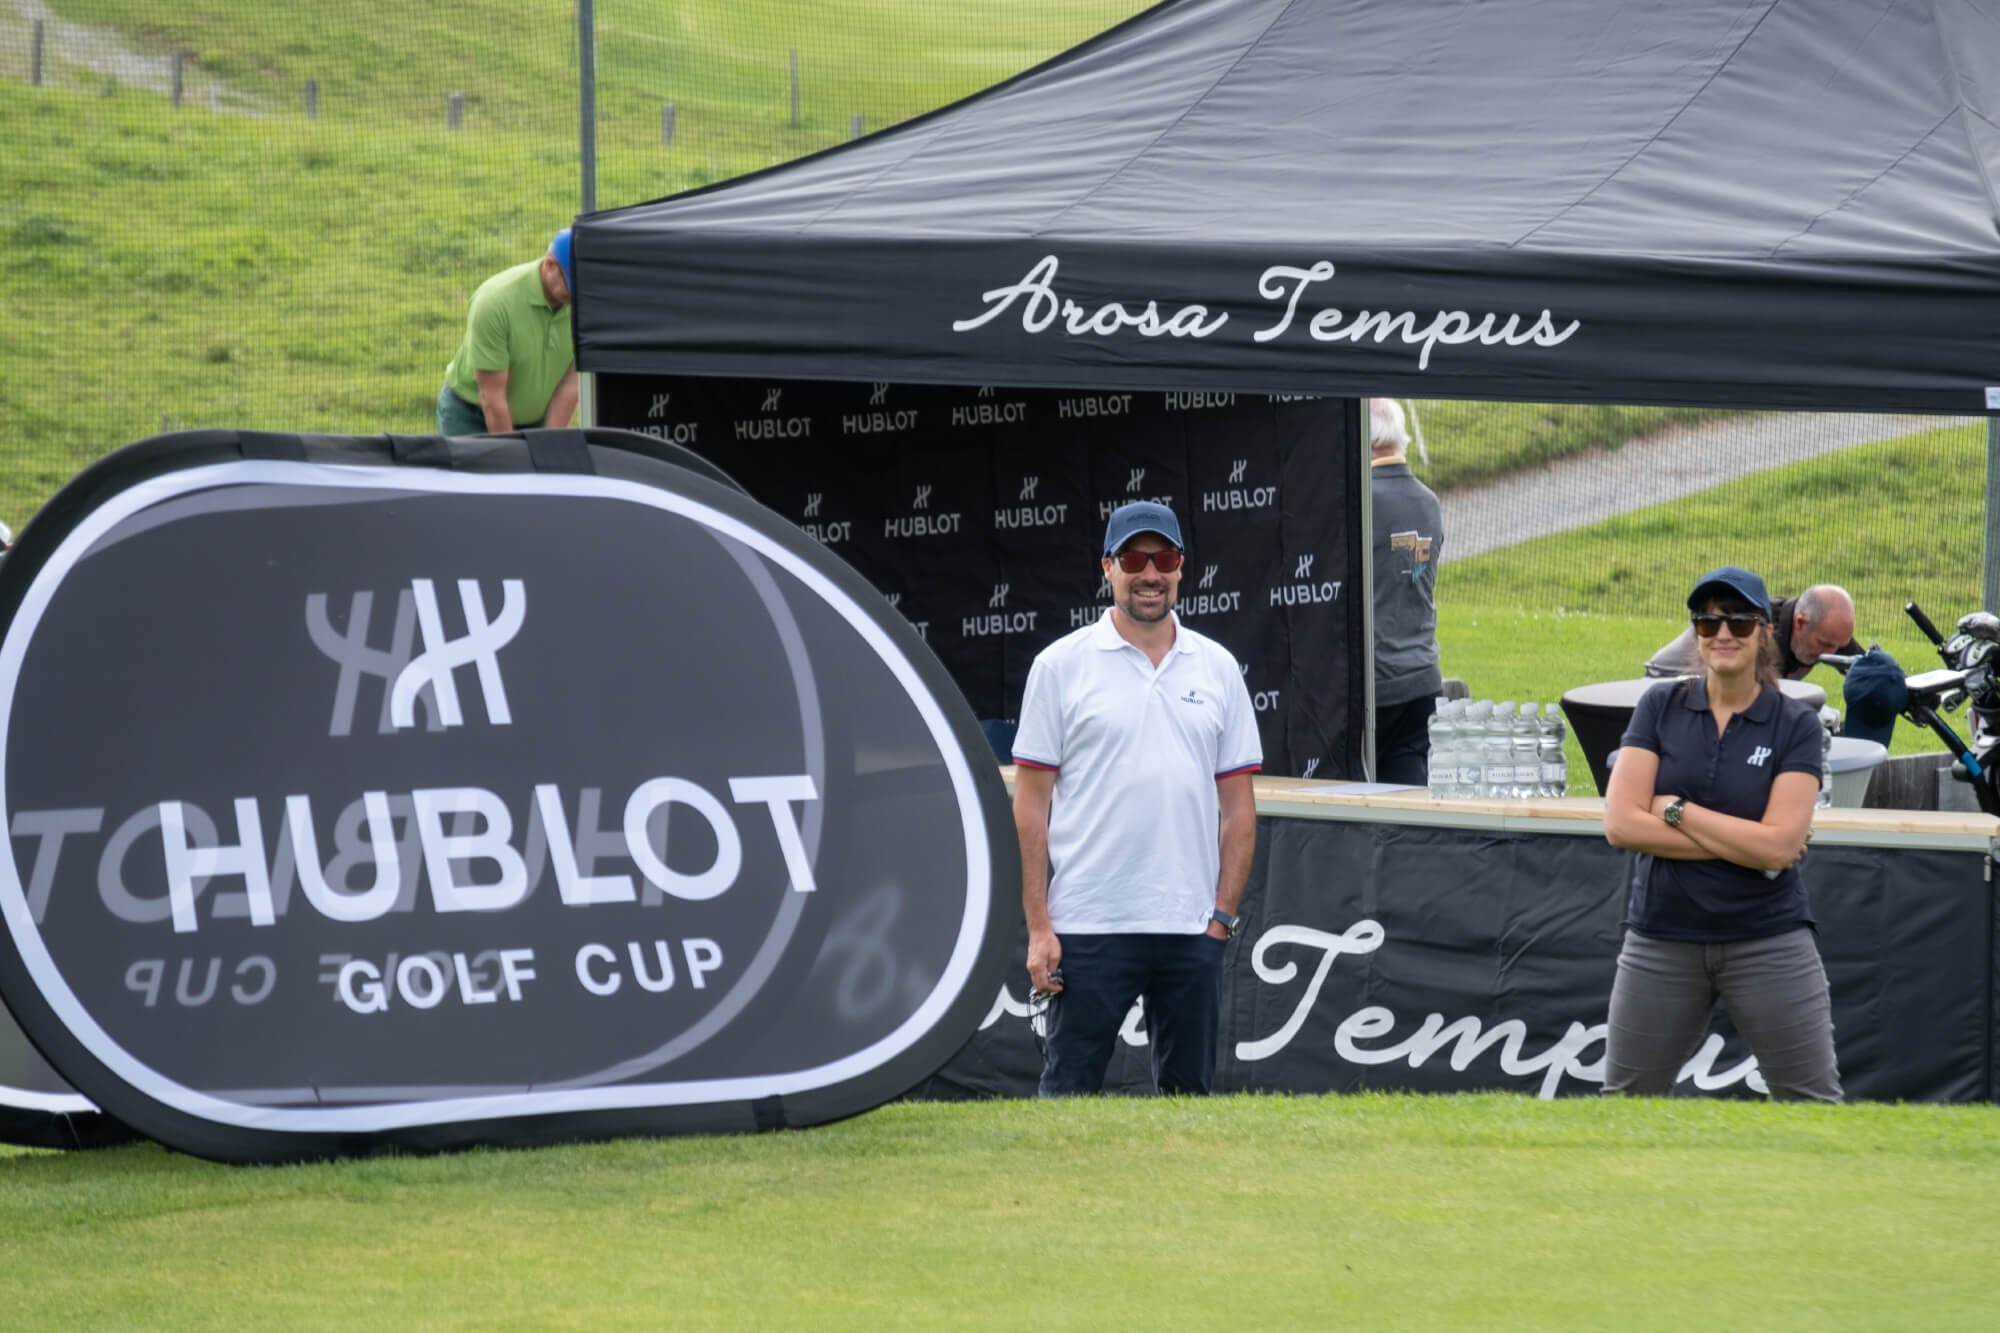 Hublot – Arosa Tempus Golf Trophy 2020